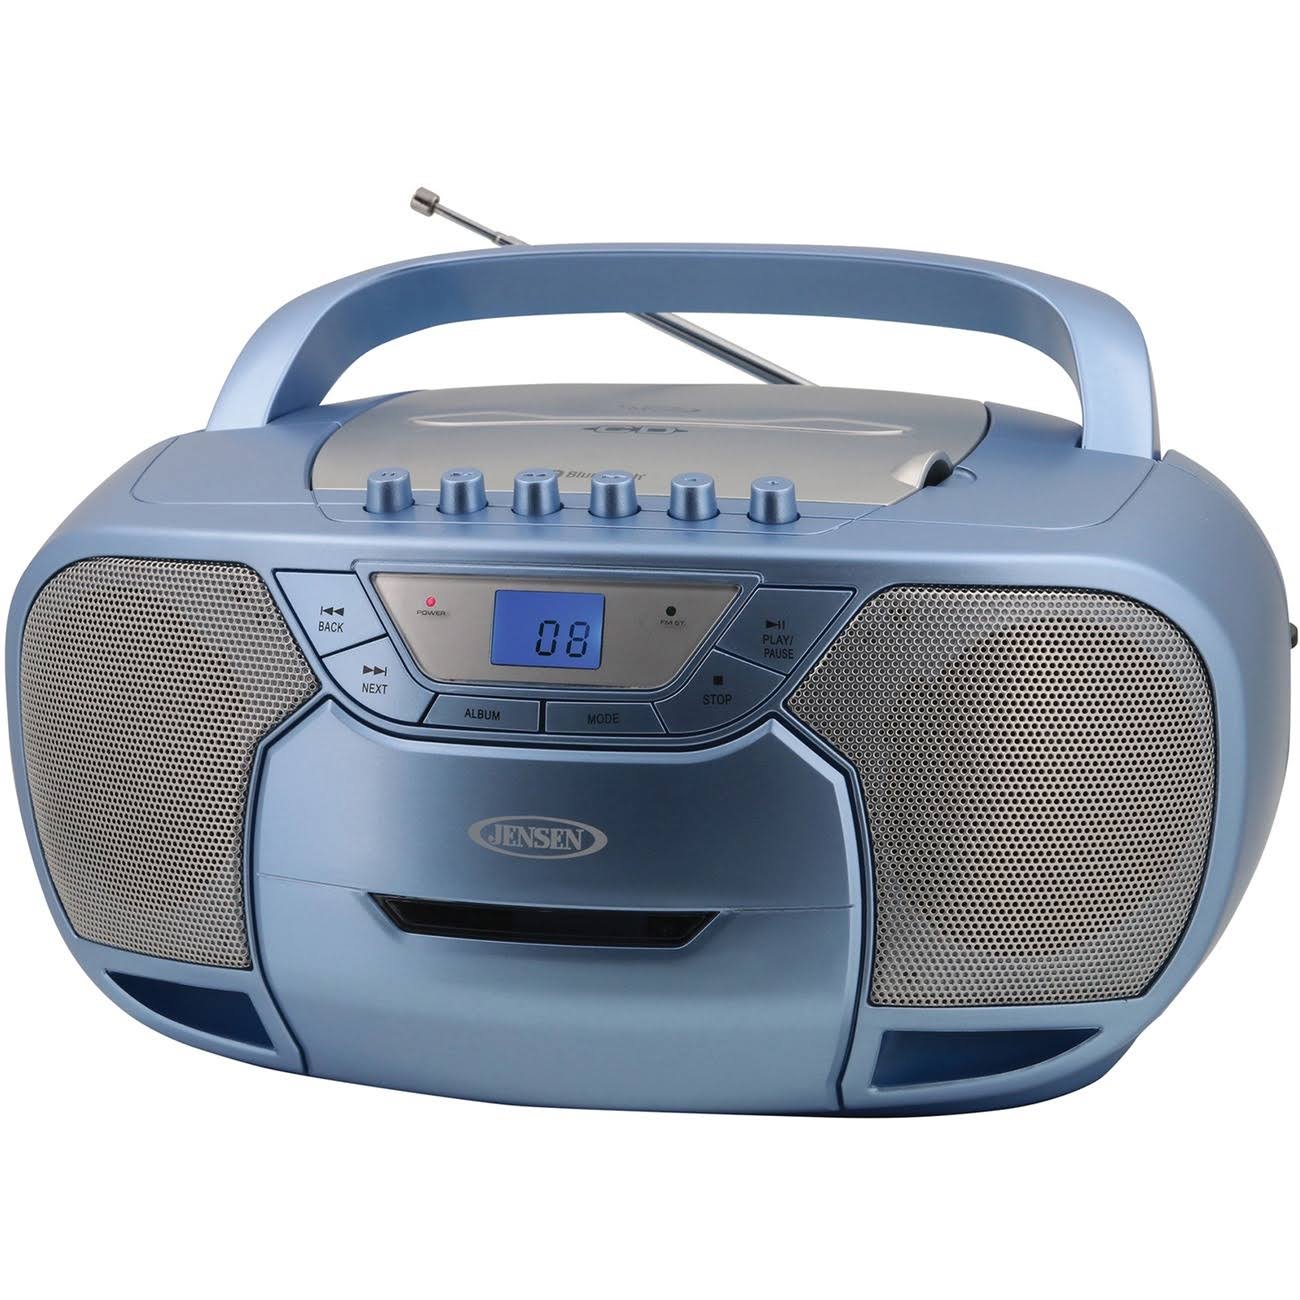 Jensen - Portable Bluetooth Stereo With AM/FM CD Cassette Player - Blue - CD-590-BL - 077283965968